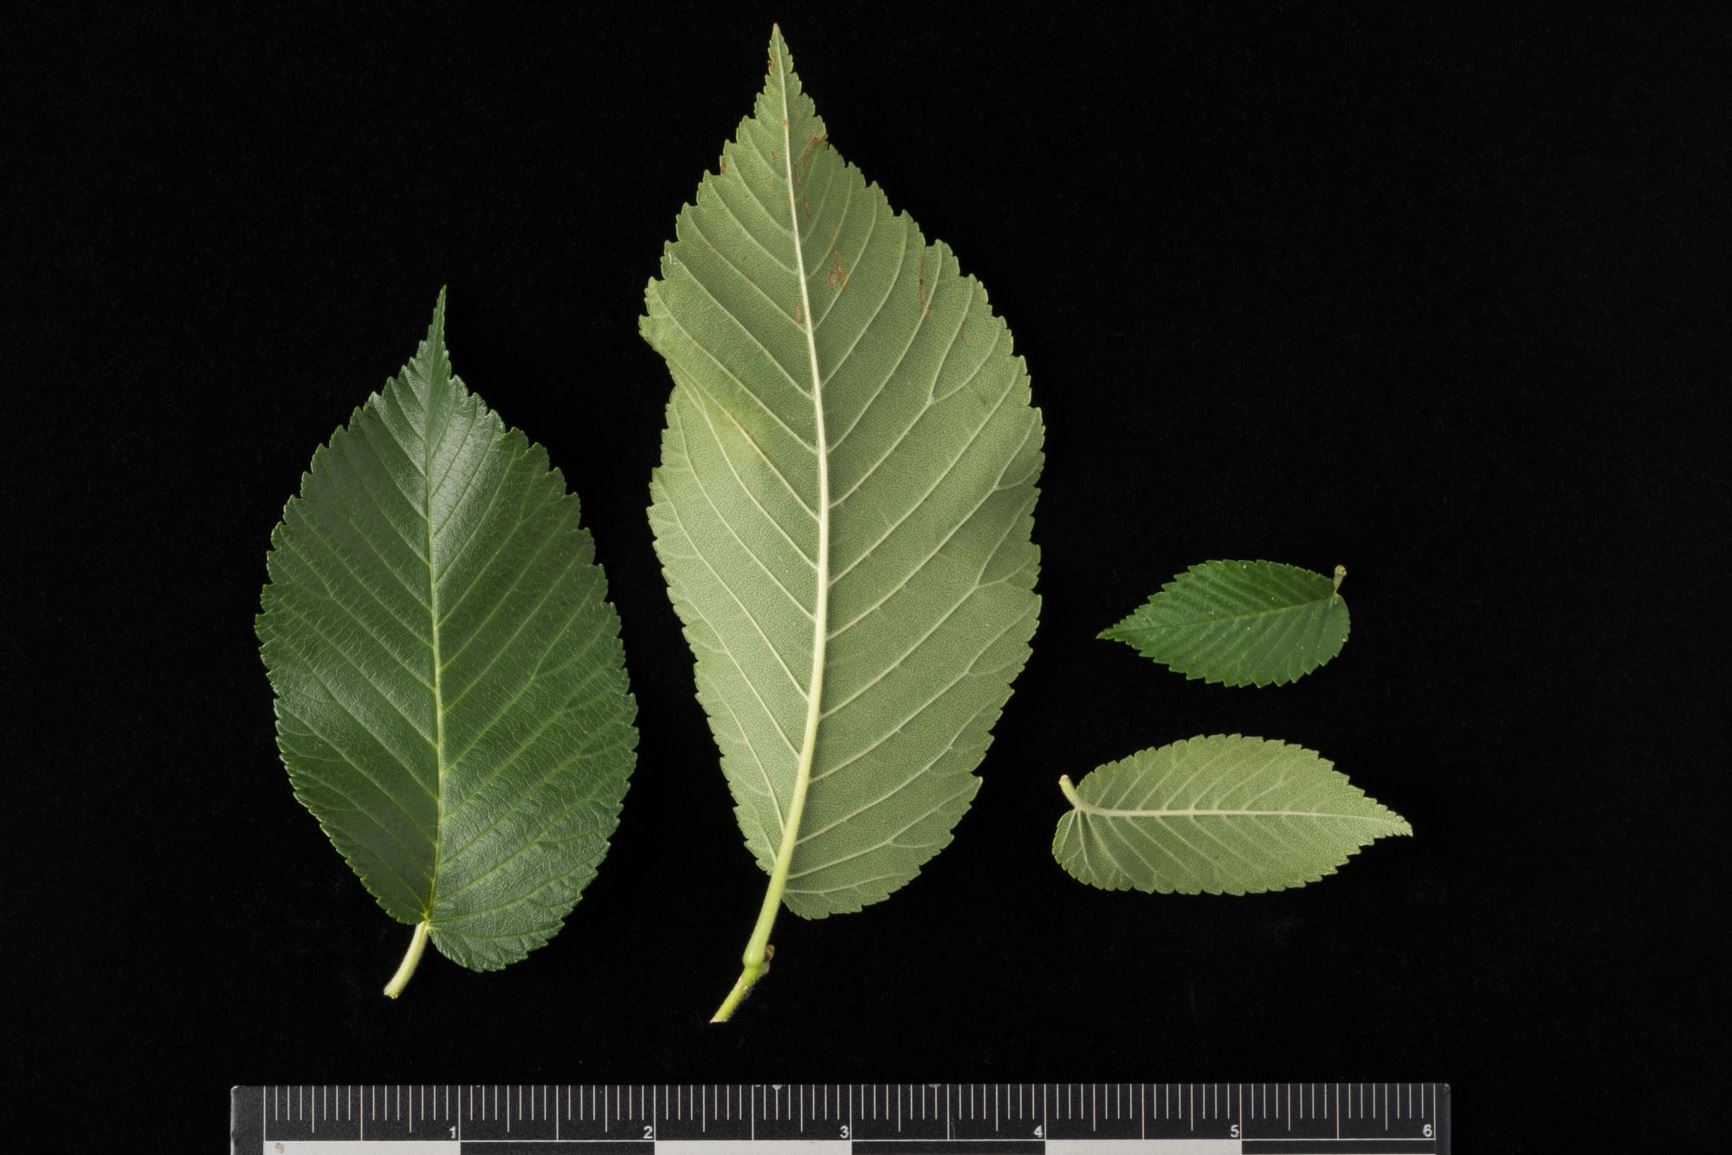 Ulmus × 'Patriot' - Hybrid Elm Cultivar, Patriot Elm